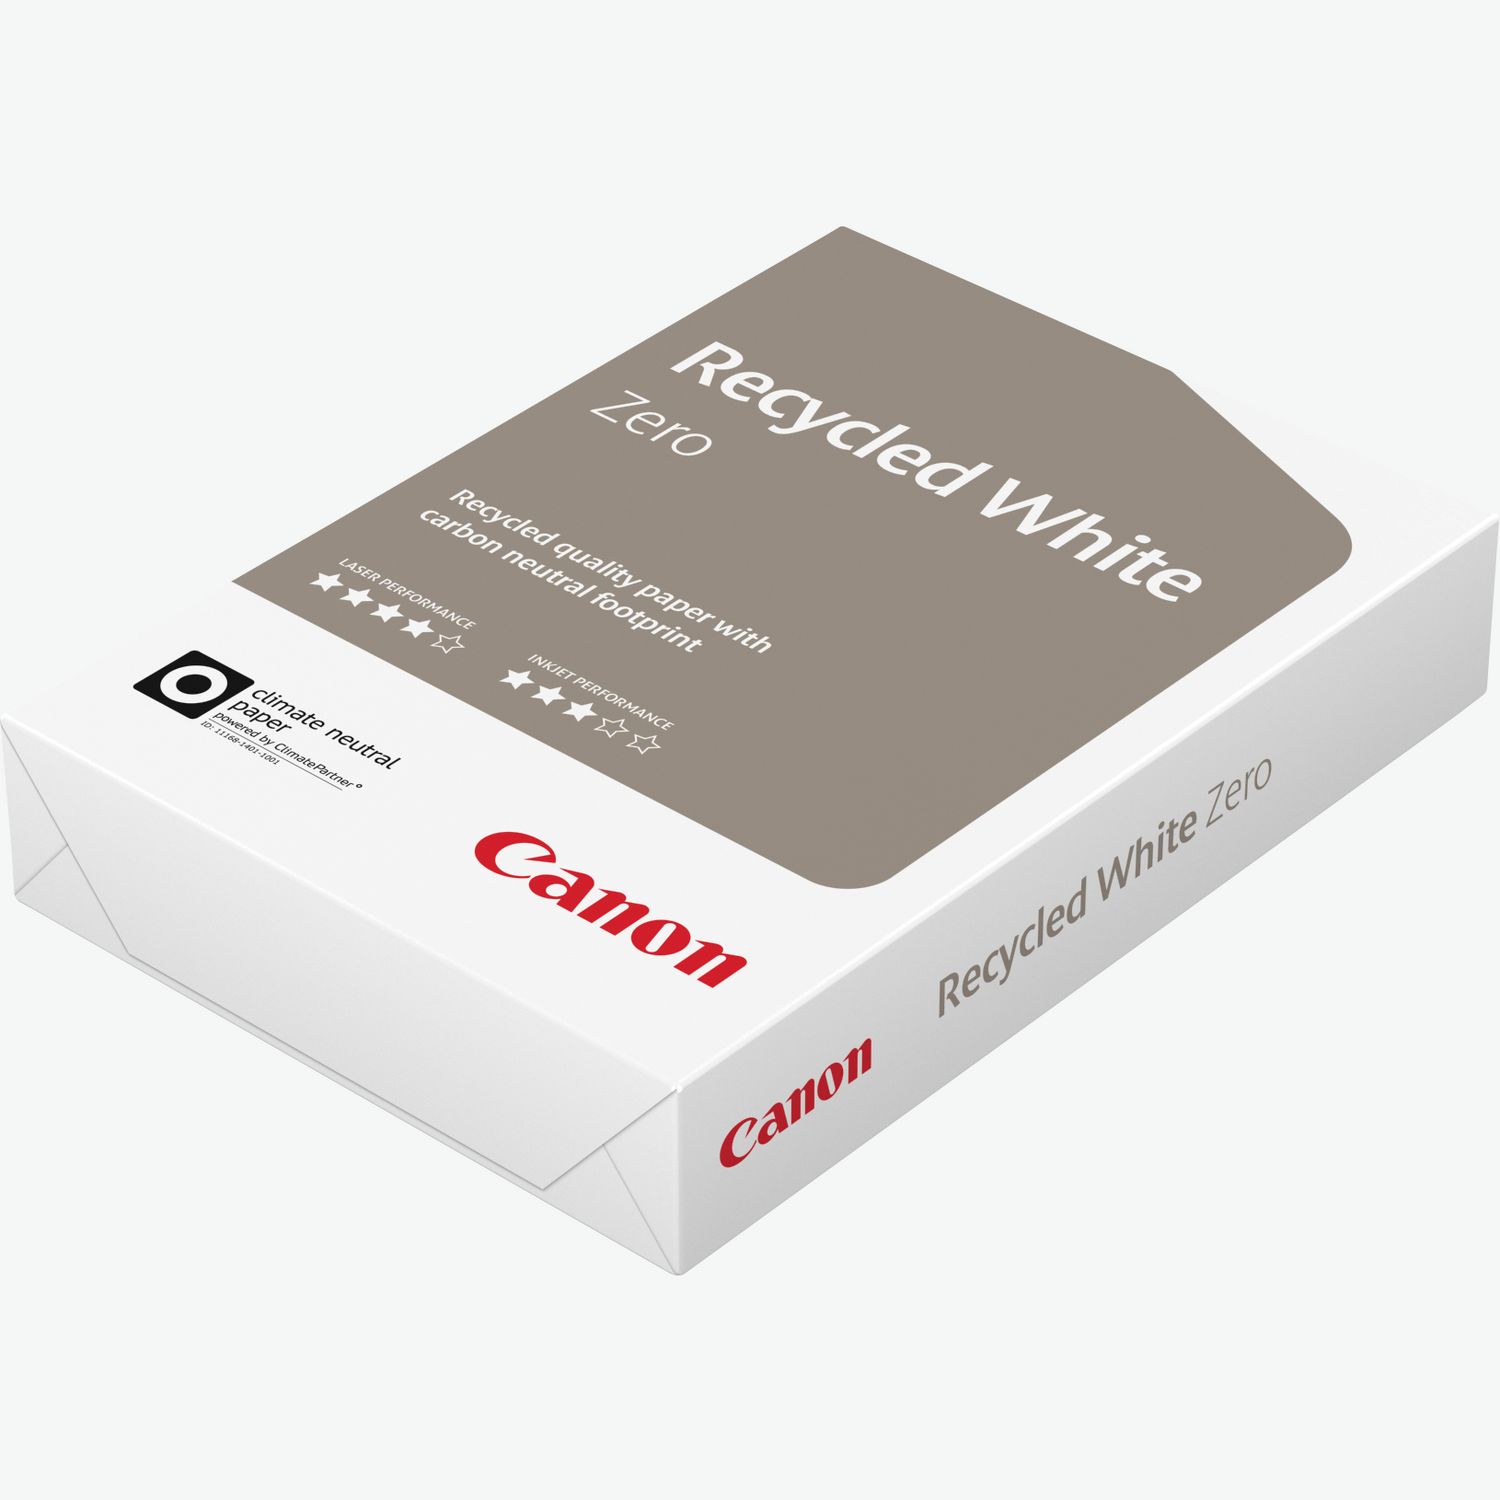 Buy Canon PIXMA TS3550i MFP Bk (Opt. w/ PPP) (4977C006)